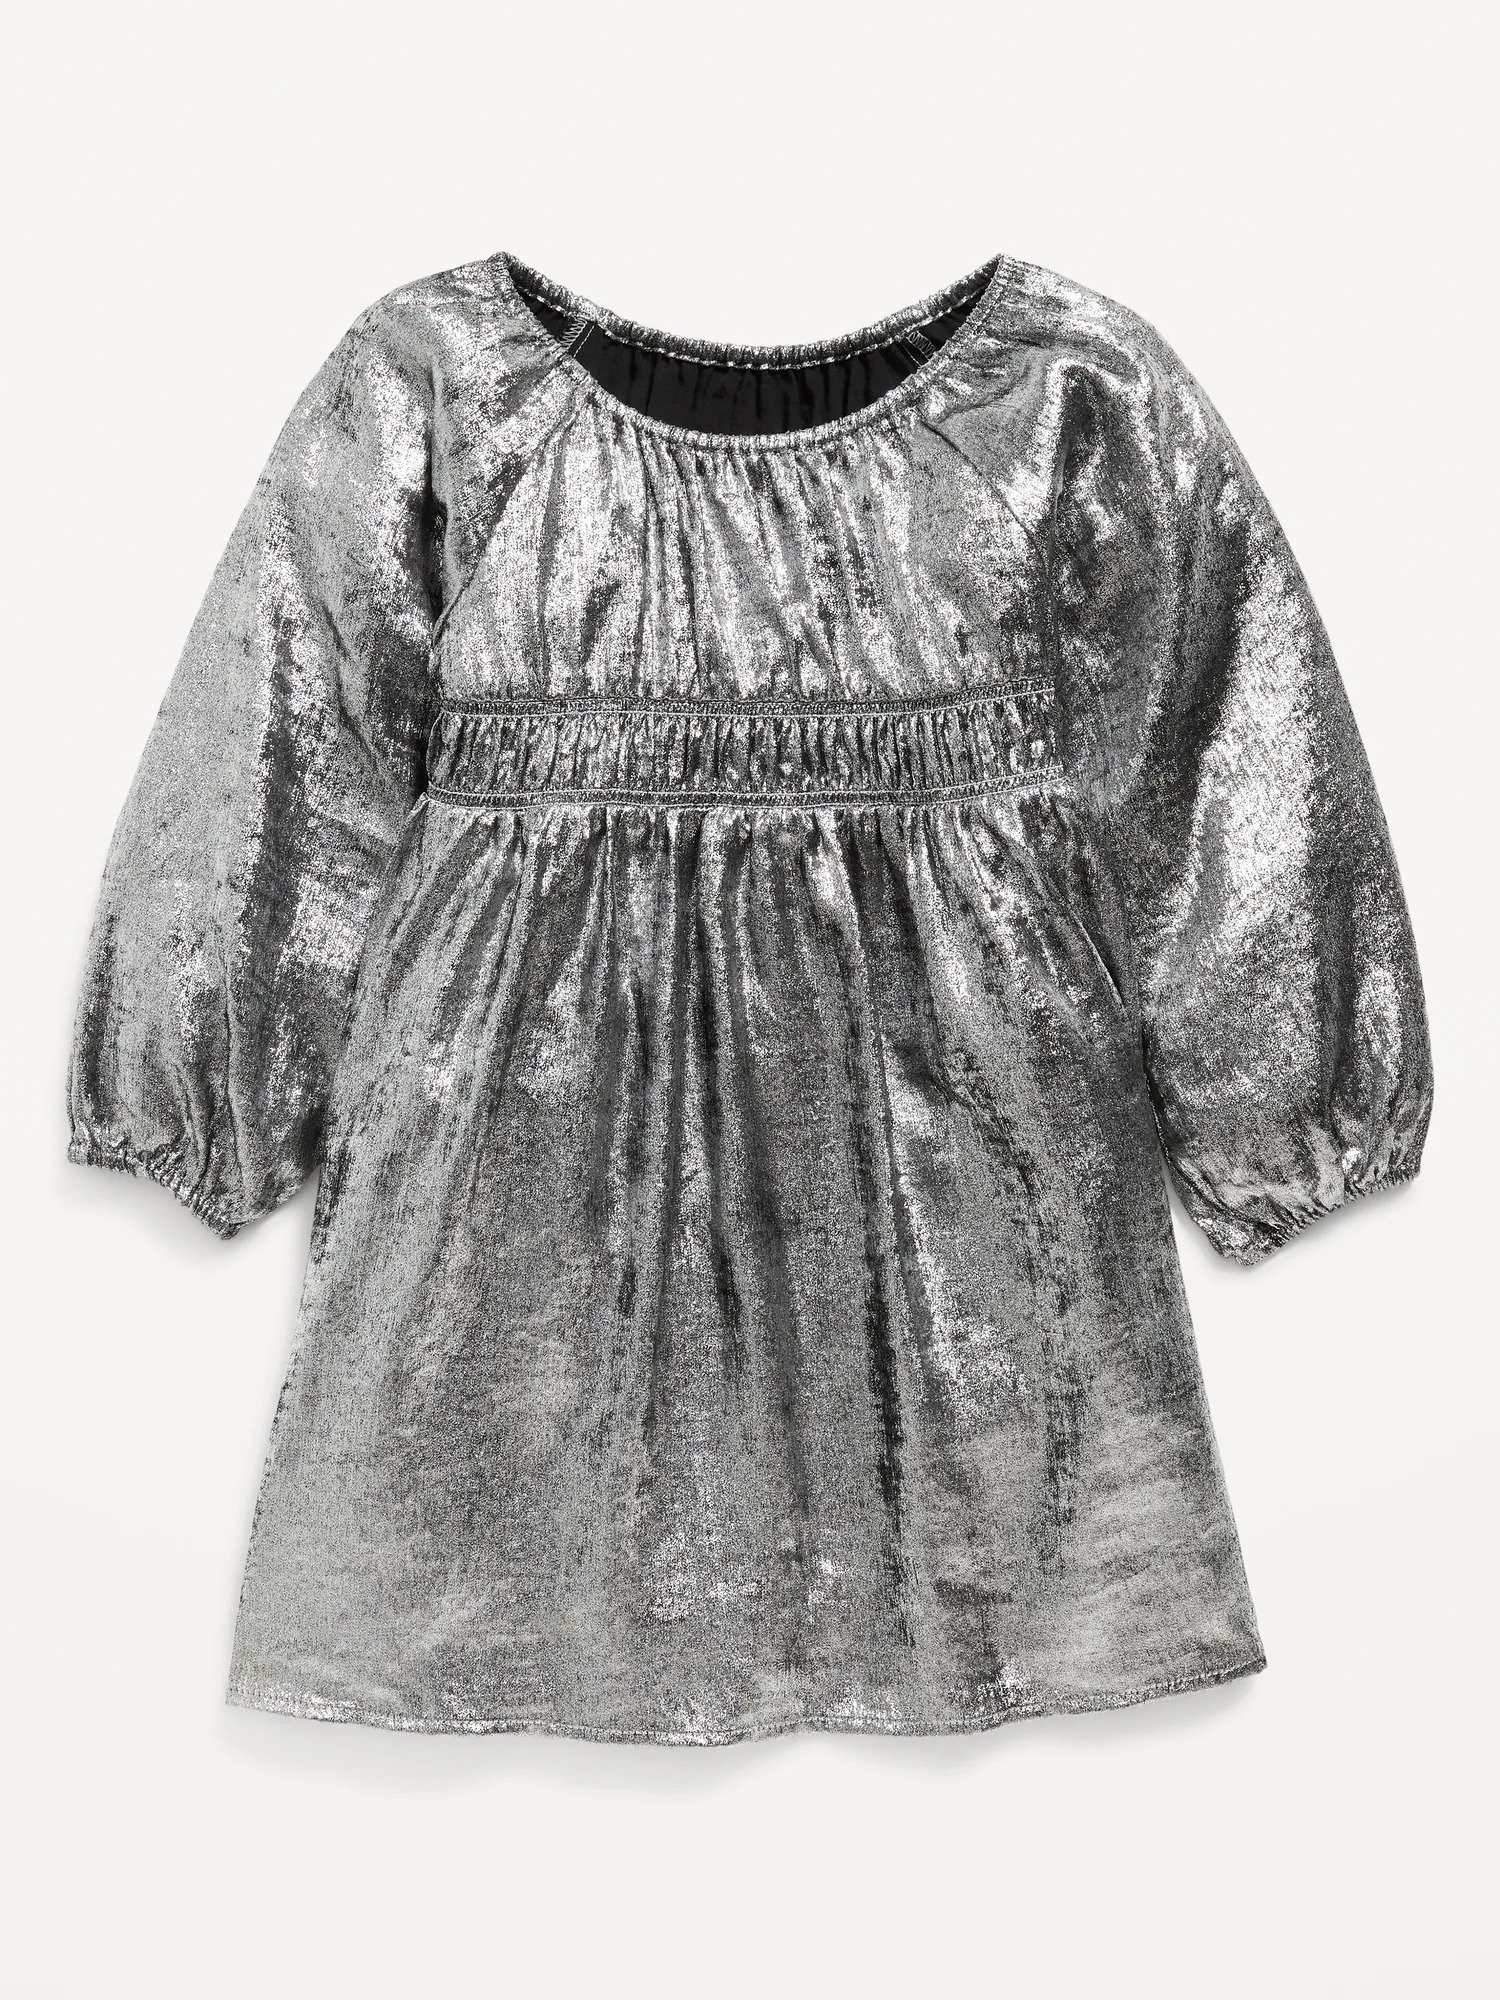    Long-Sleeve Metallic-Silver Dress for Toddler Girls, P1,650   